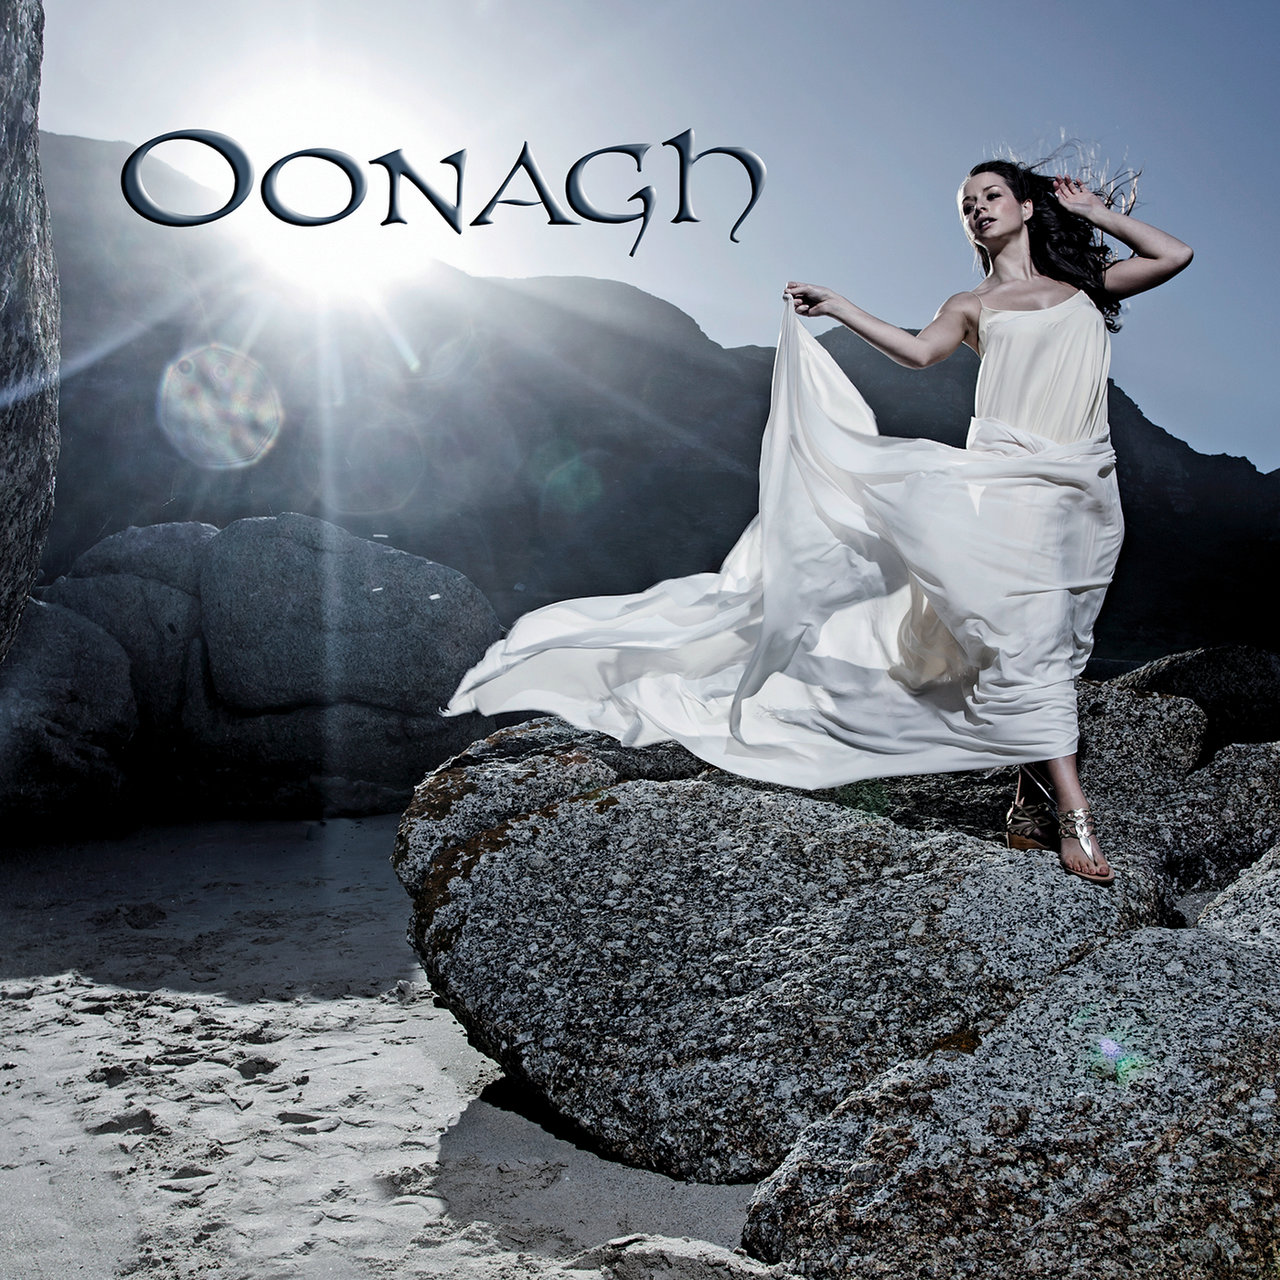 Oonagh — Orome cover artwork